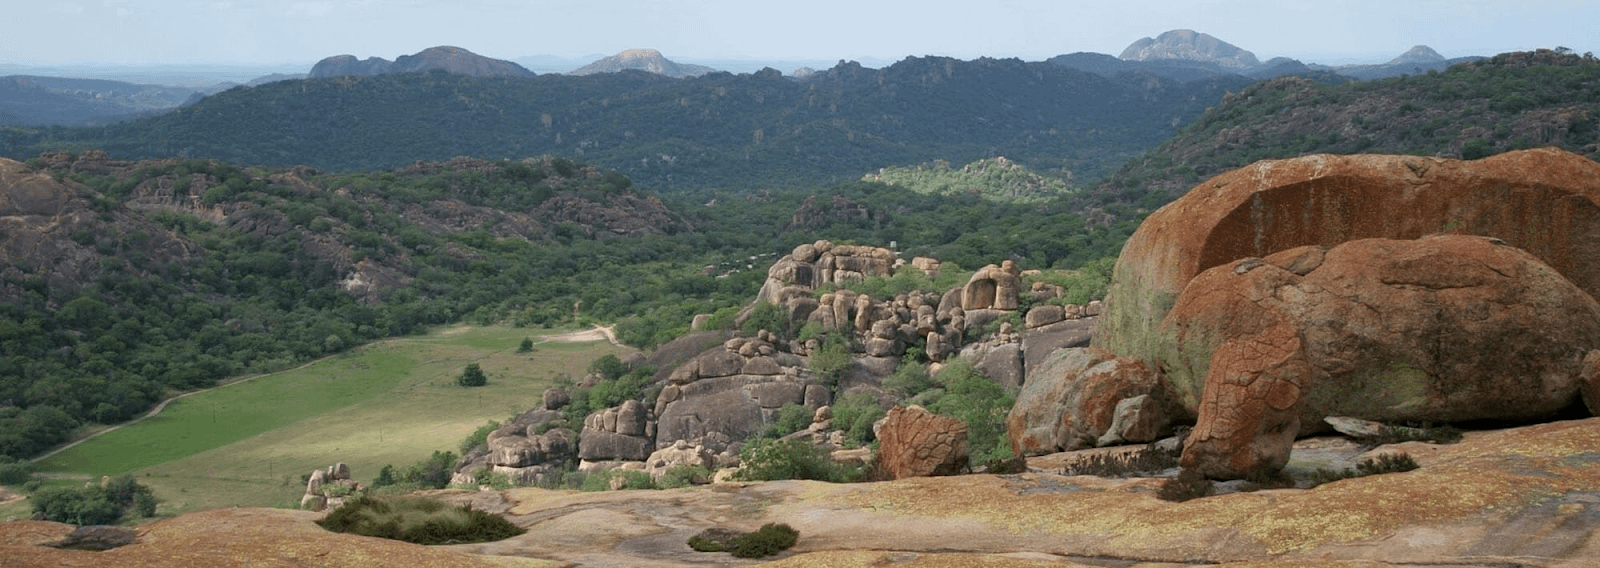 Top Destinations For A Zimbabwe Safari And What Makes Them Unique